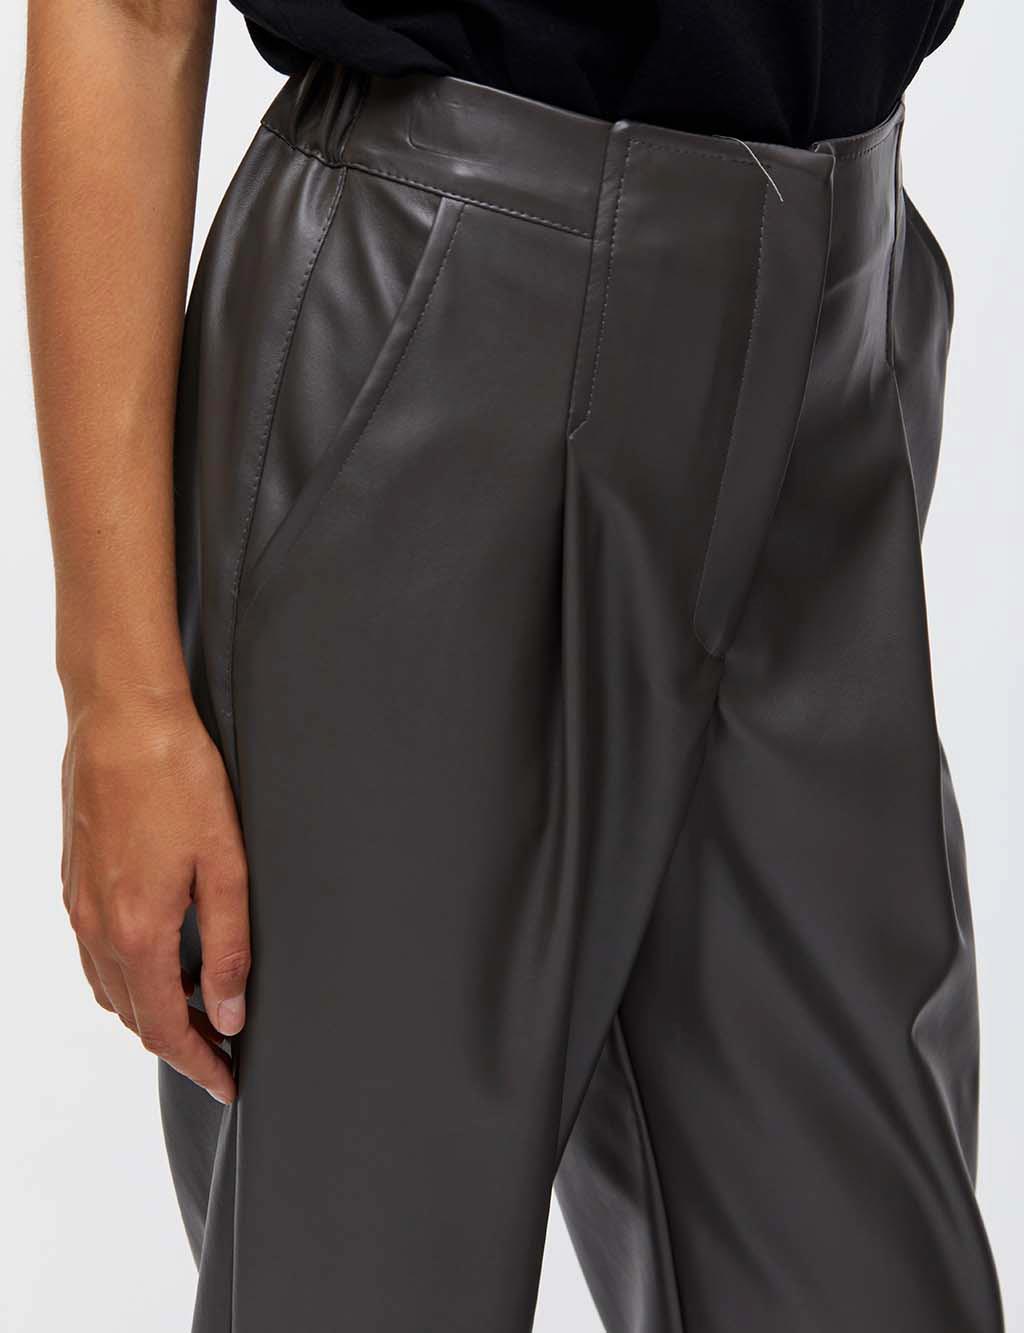 Pleated Faux Leather Pants A21 19053 Khaki